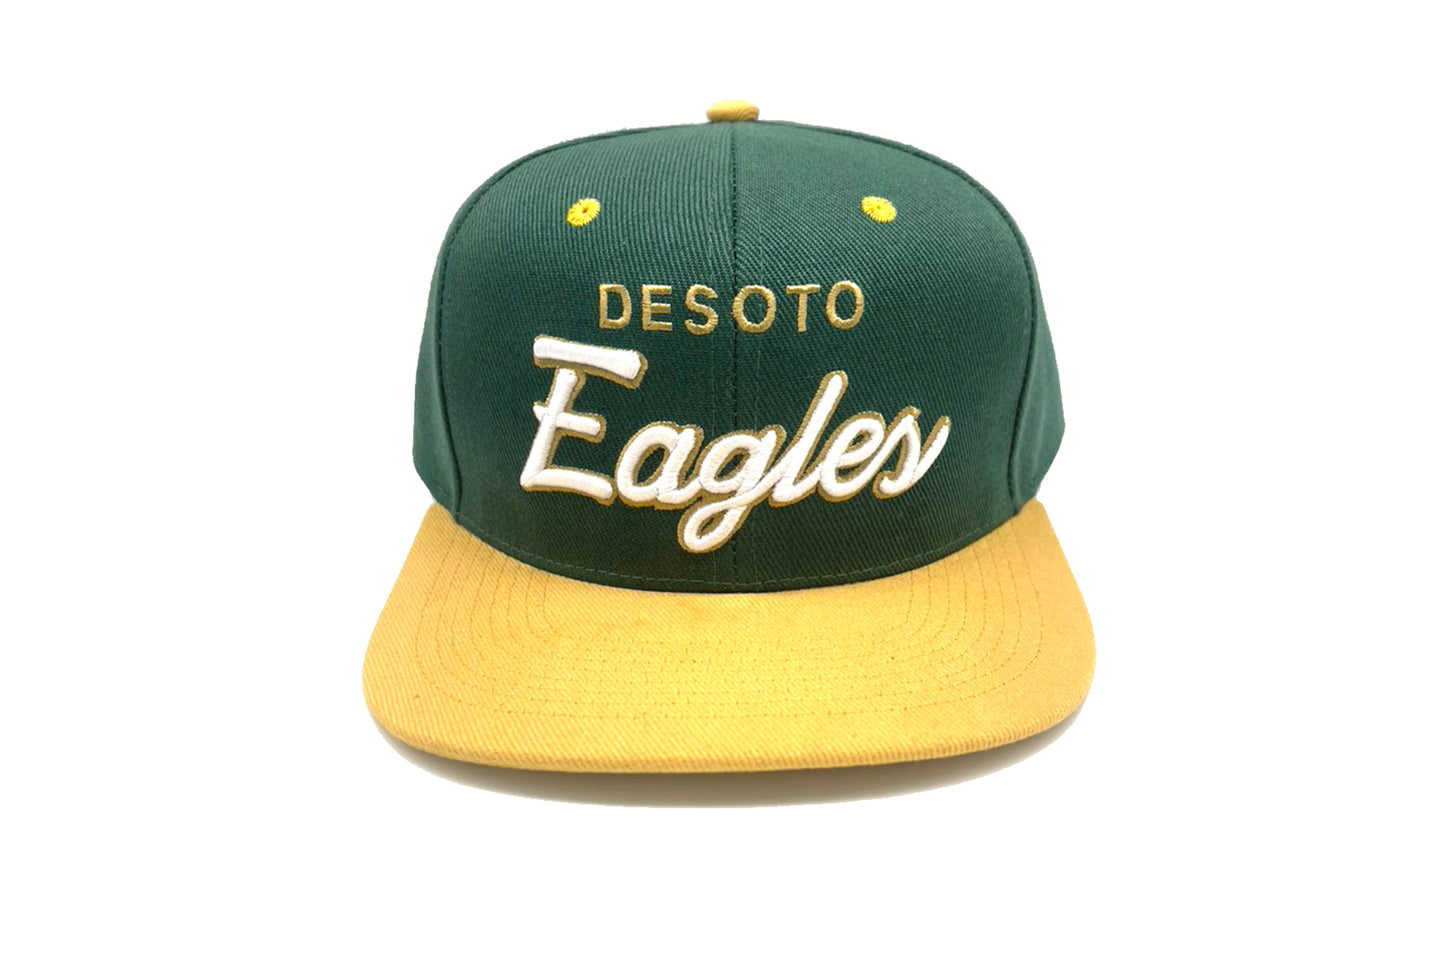 DeSoto Eagles Green/Gold Hat